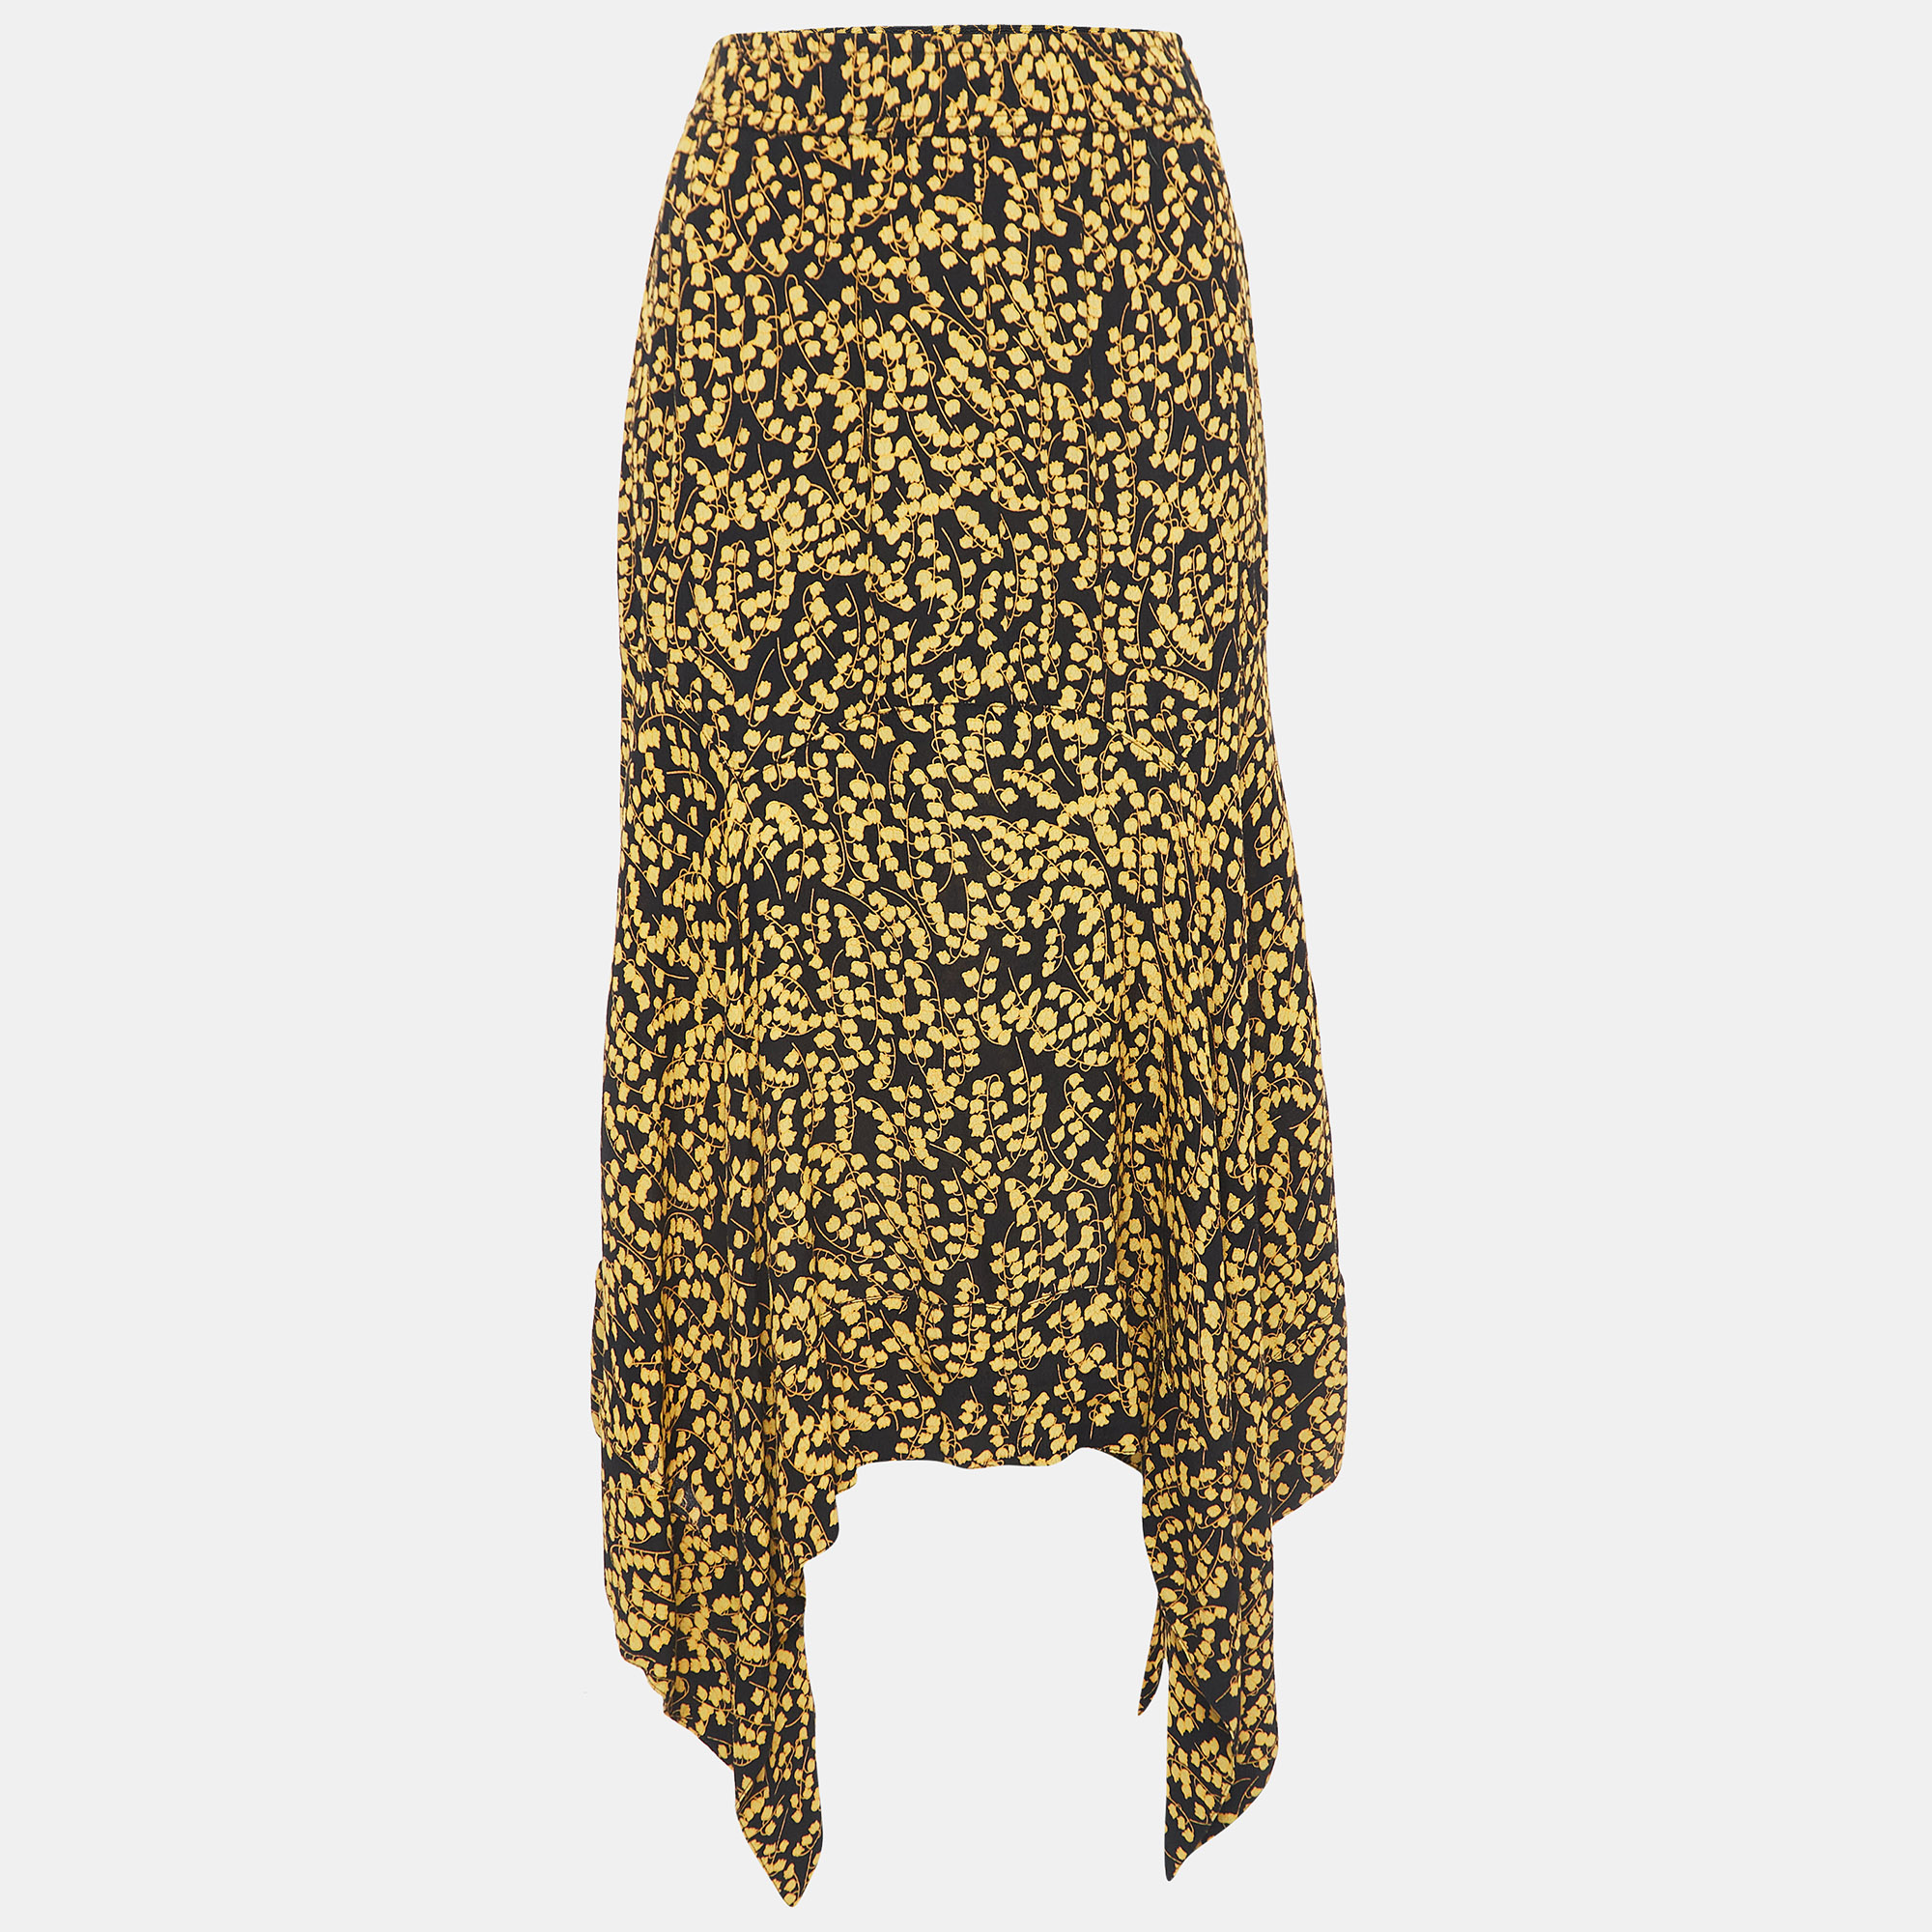 Ganni black/yellow floral printed crepe asymmetrical skirt l